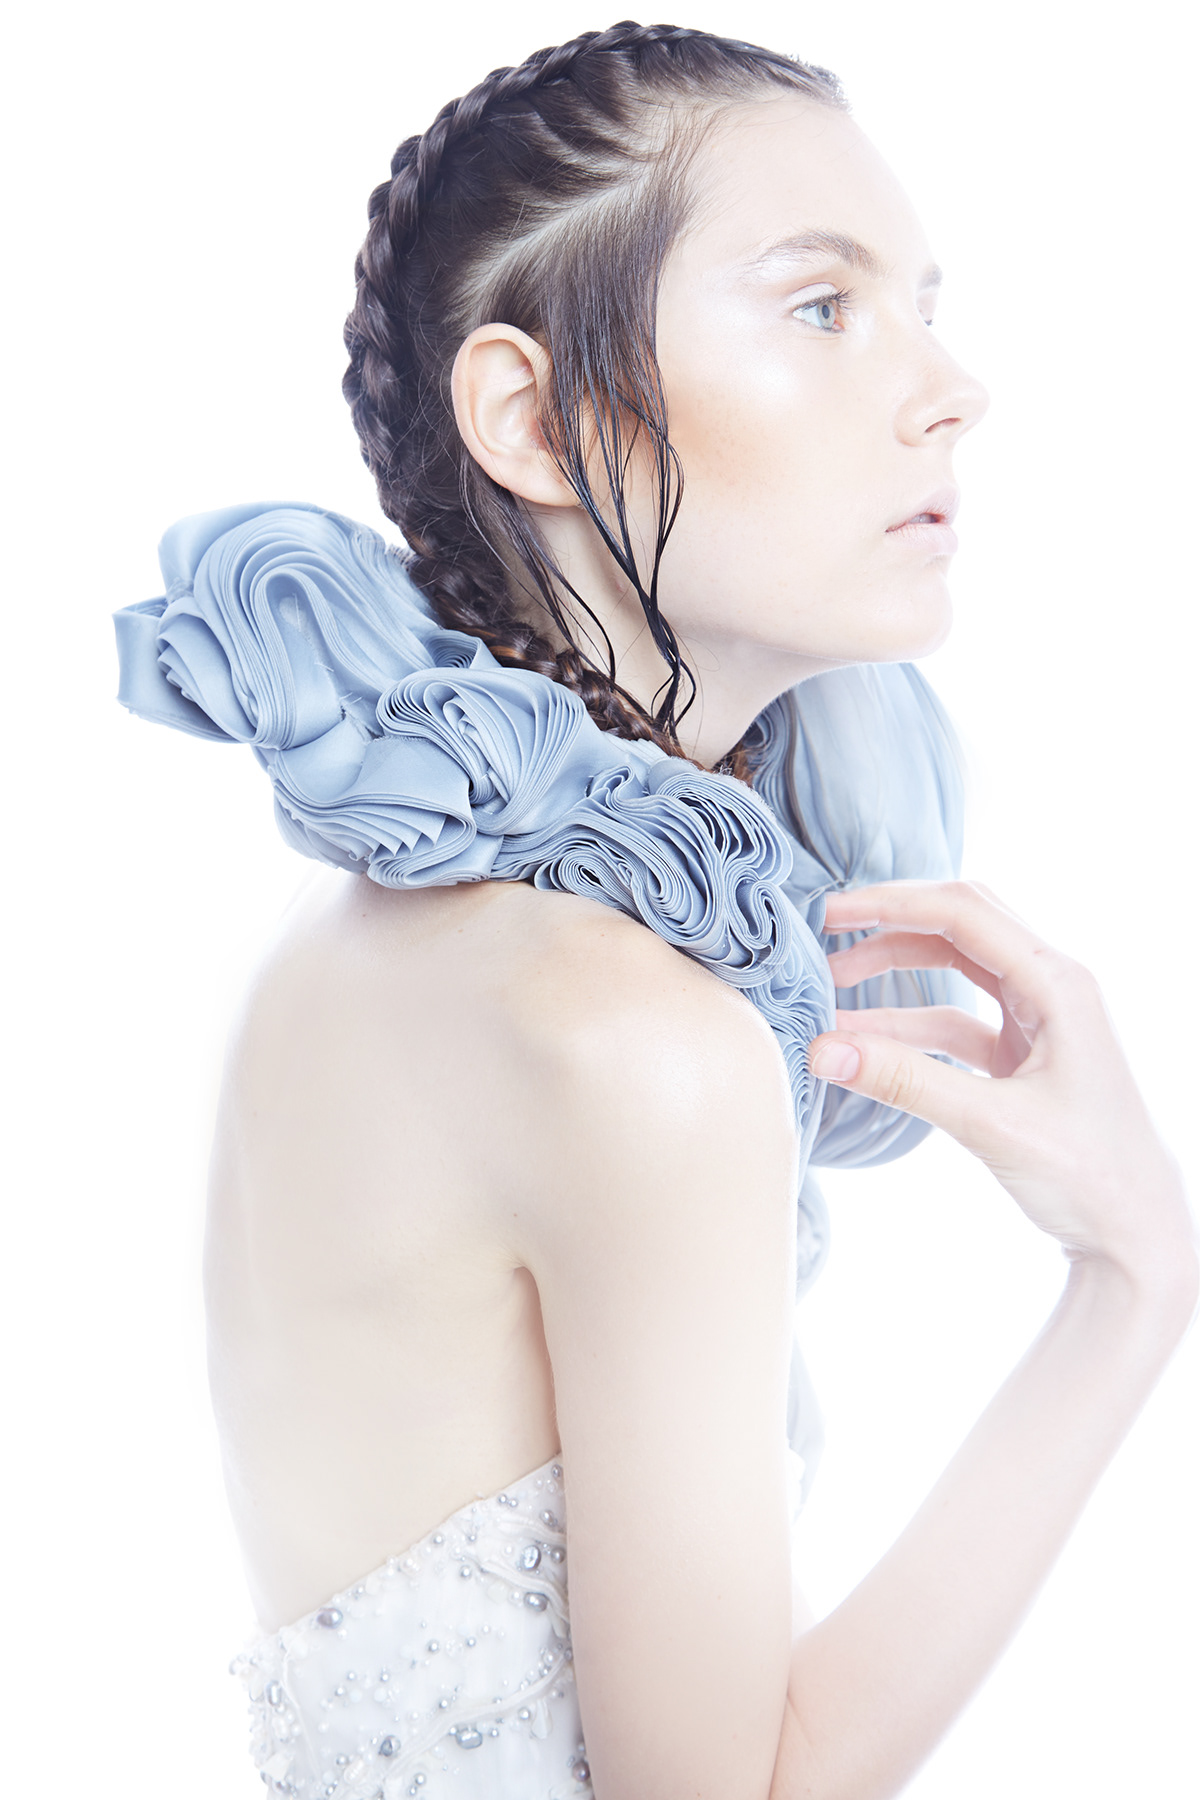 interstellar couture model futuristic avantgarde design studio light Bangkok Thailand makeup hairdo